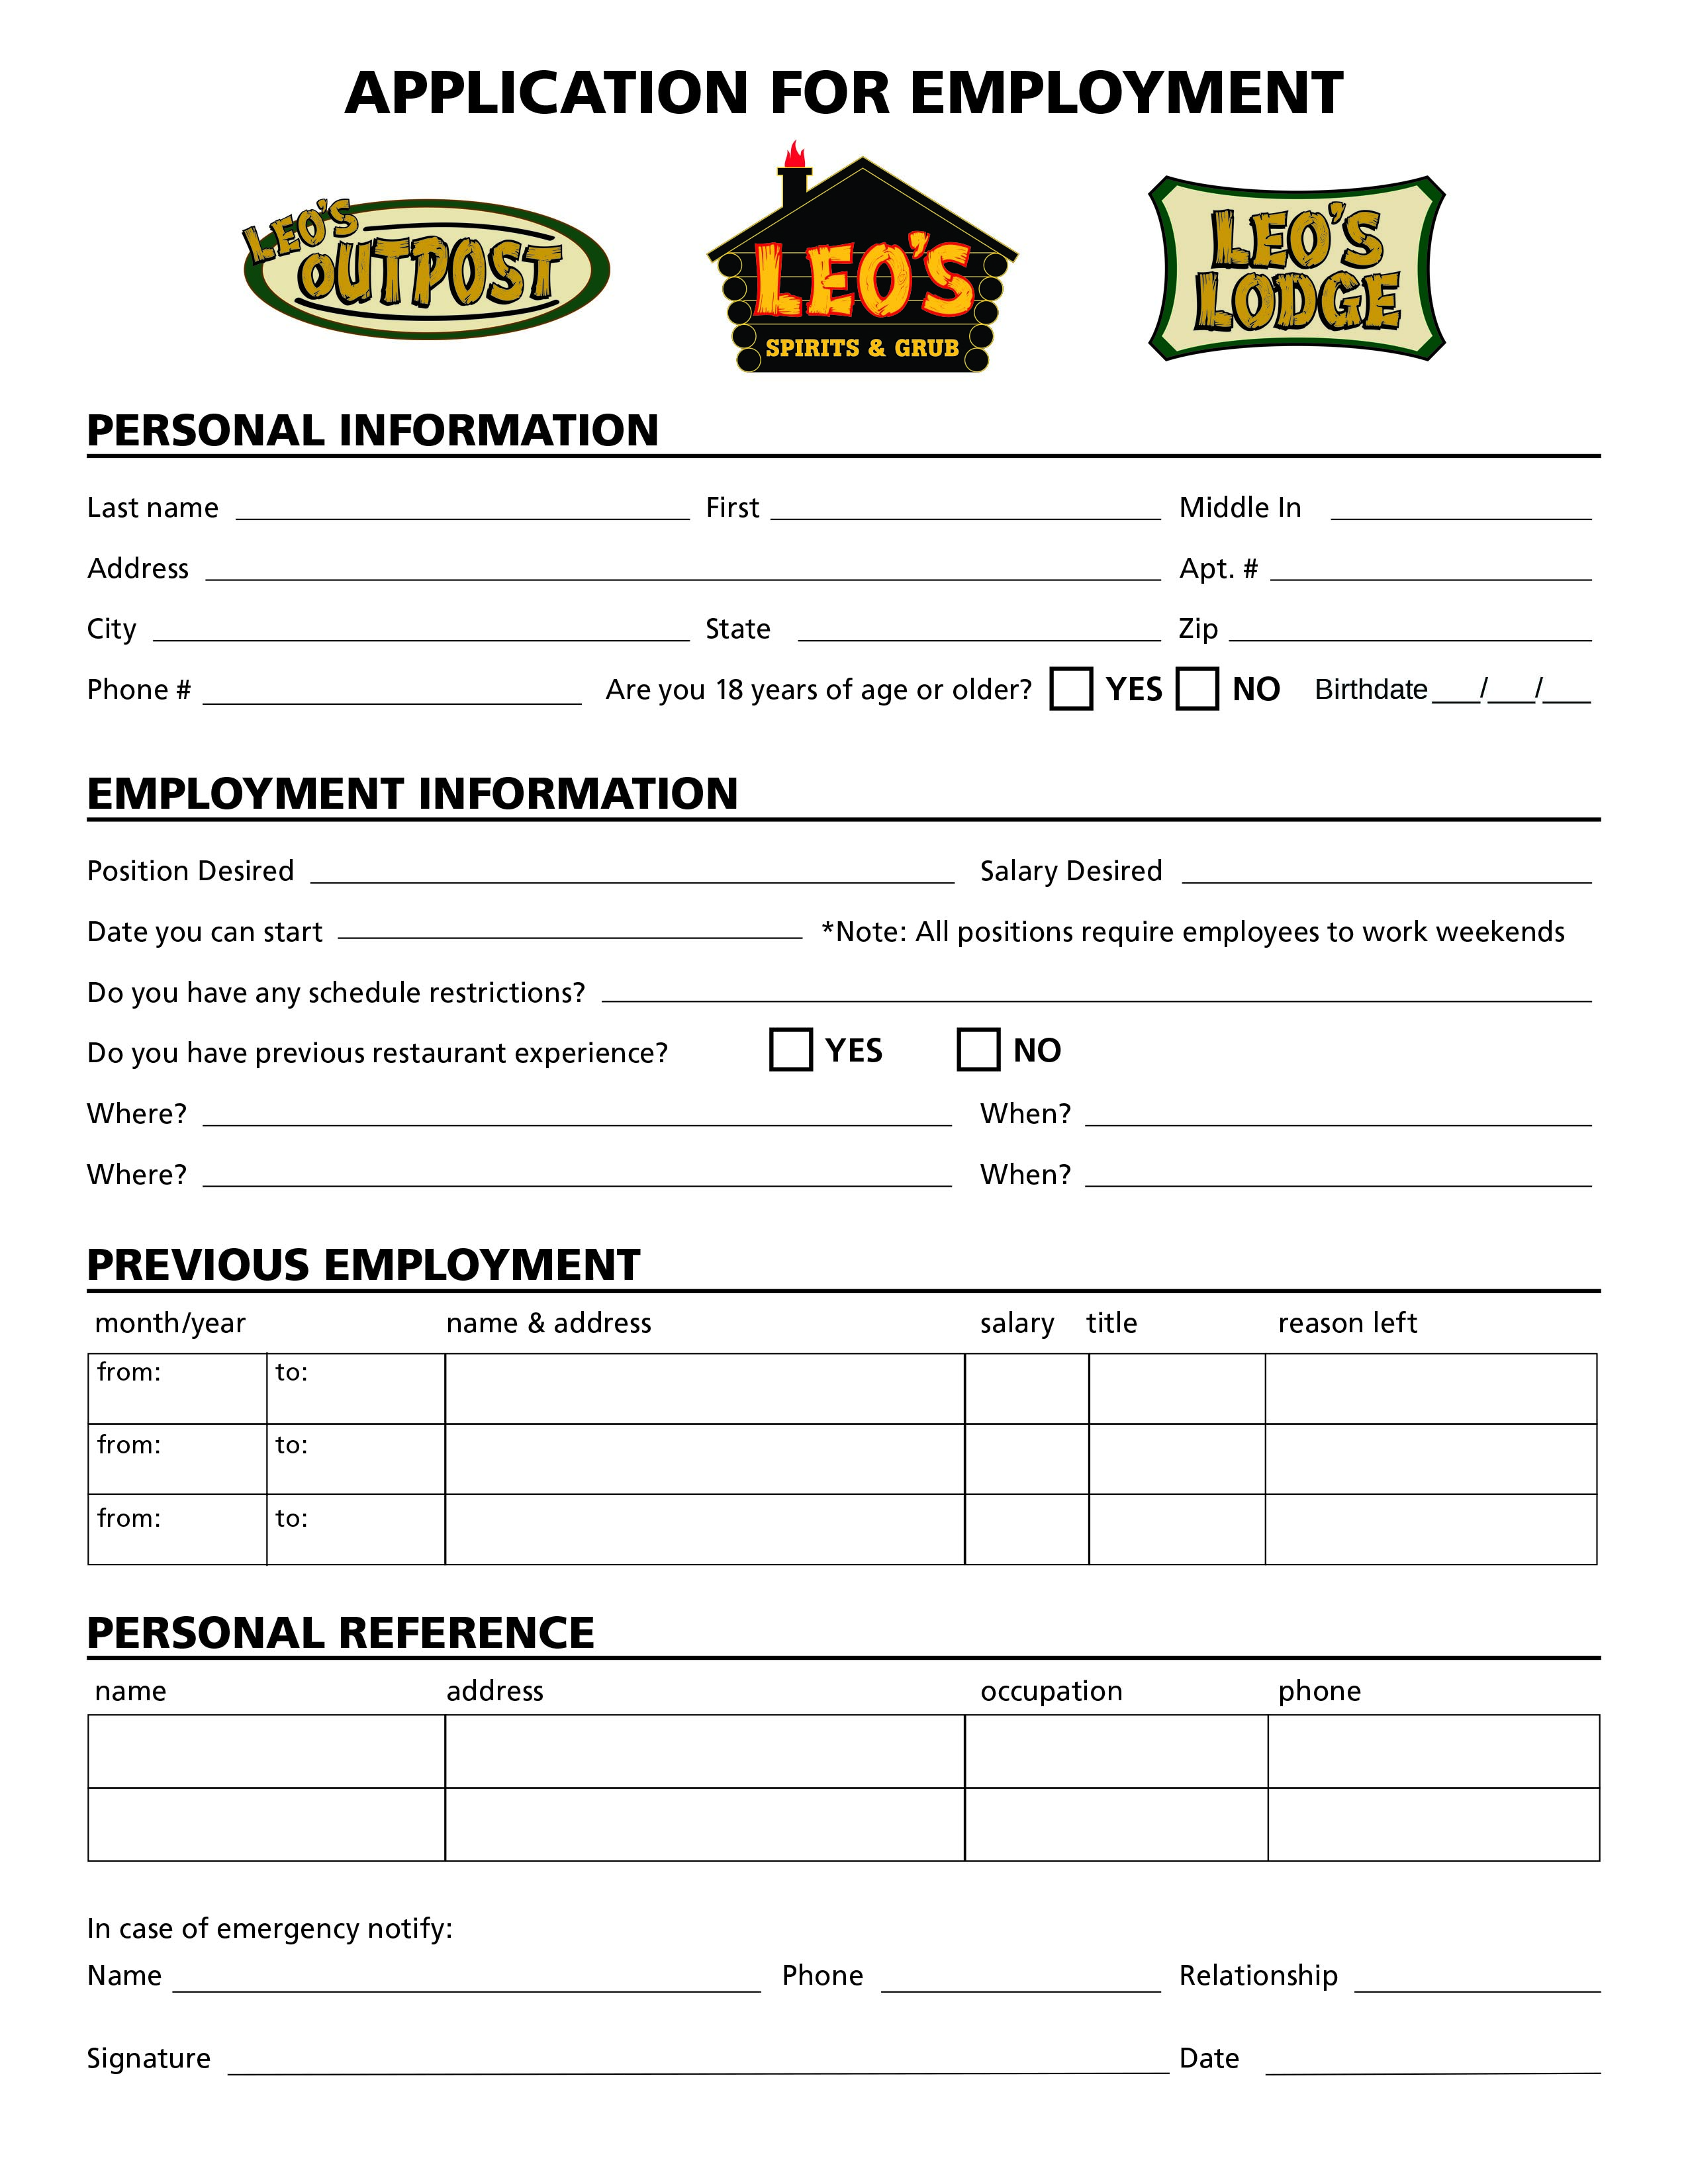 Olive Garden Job Application Form Online King Job Applications